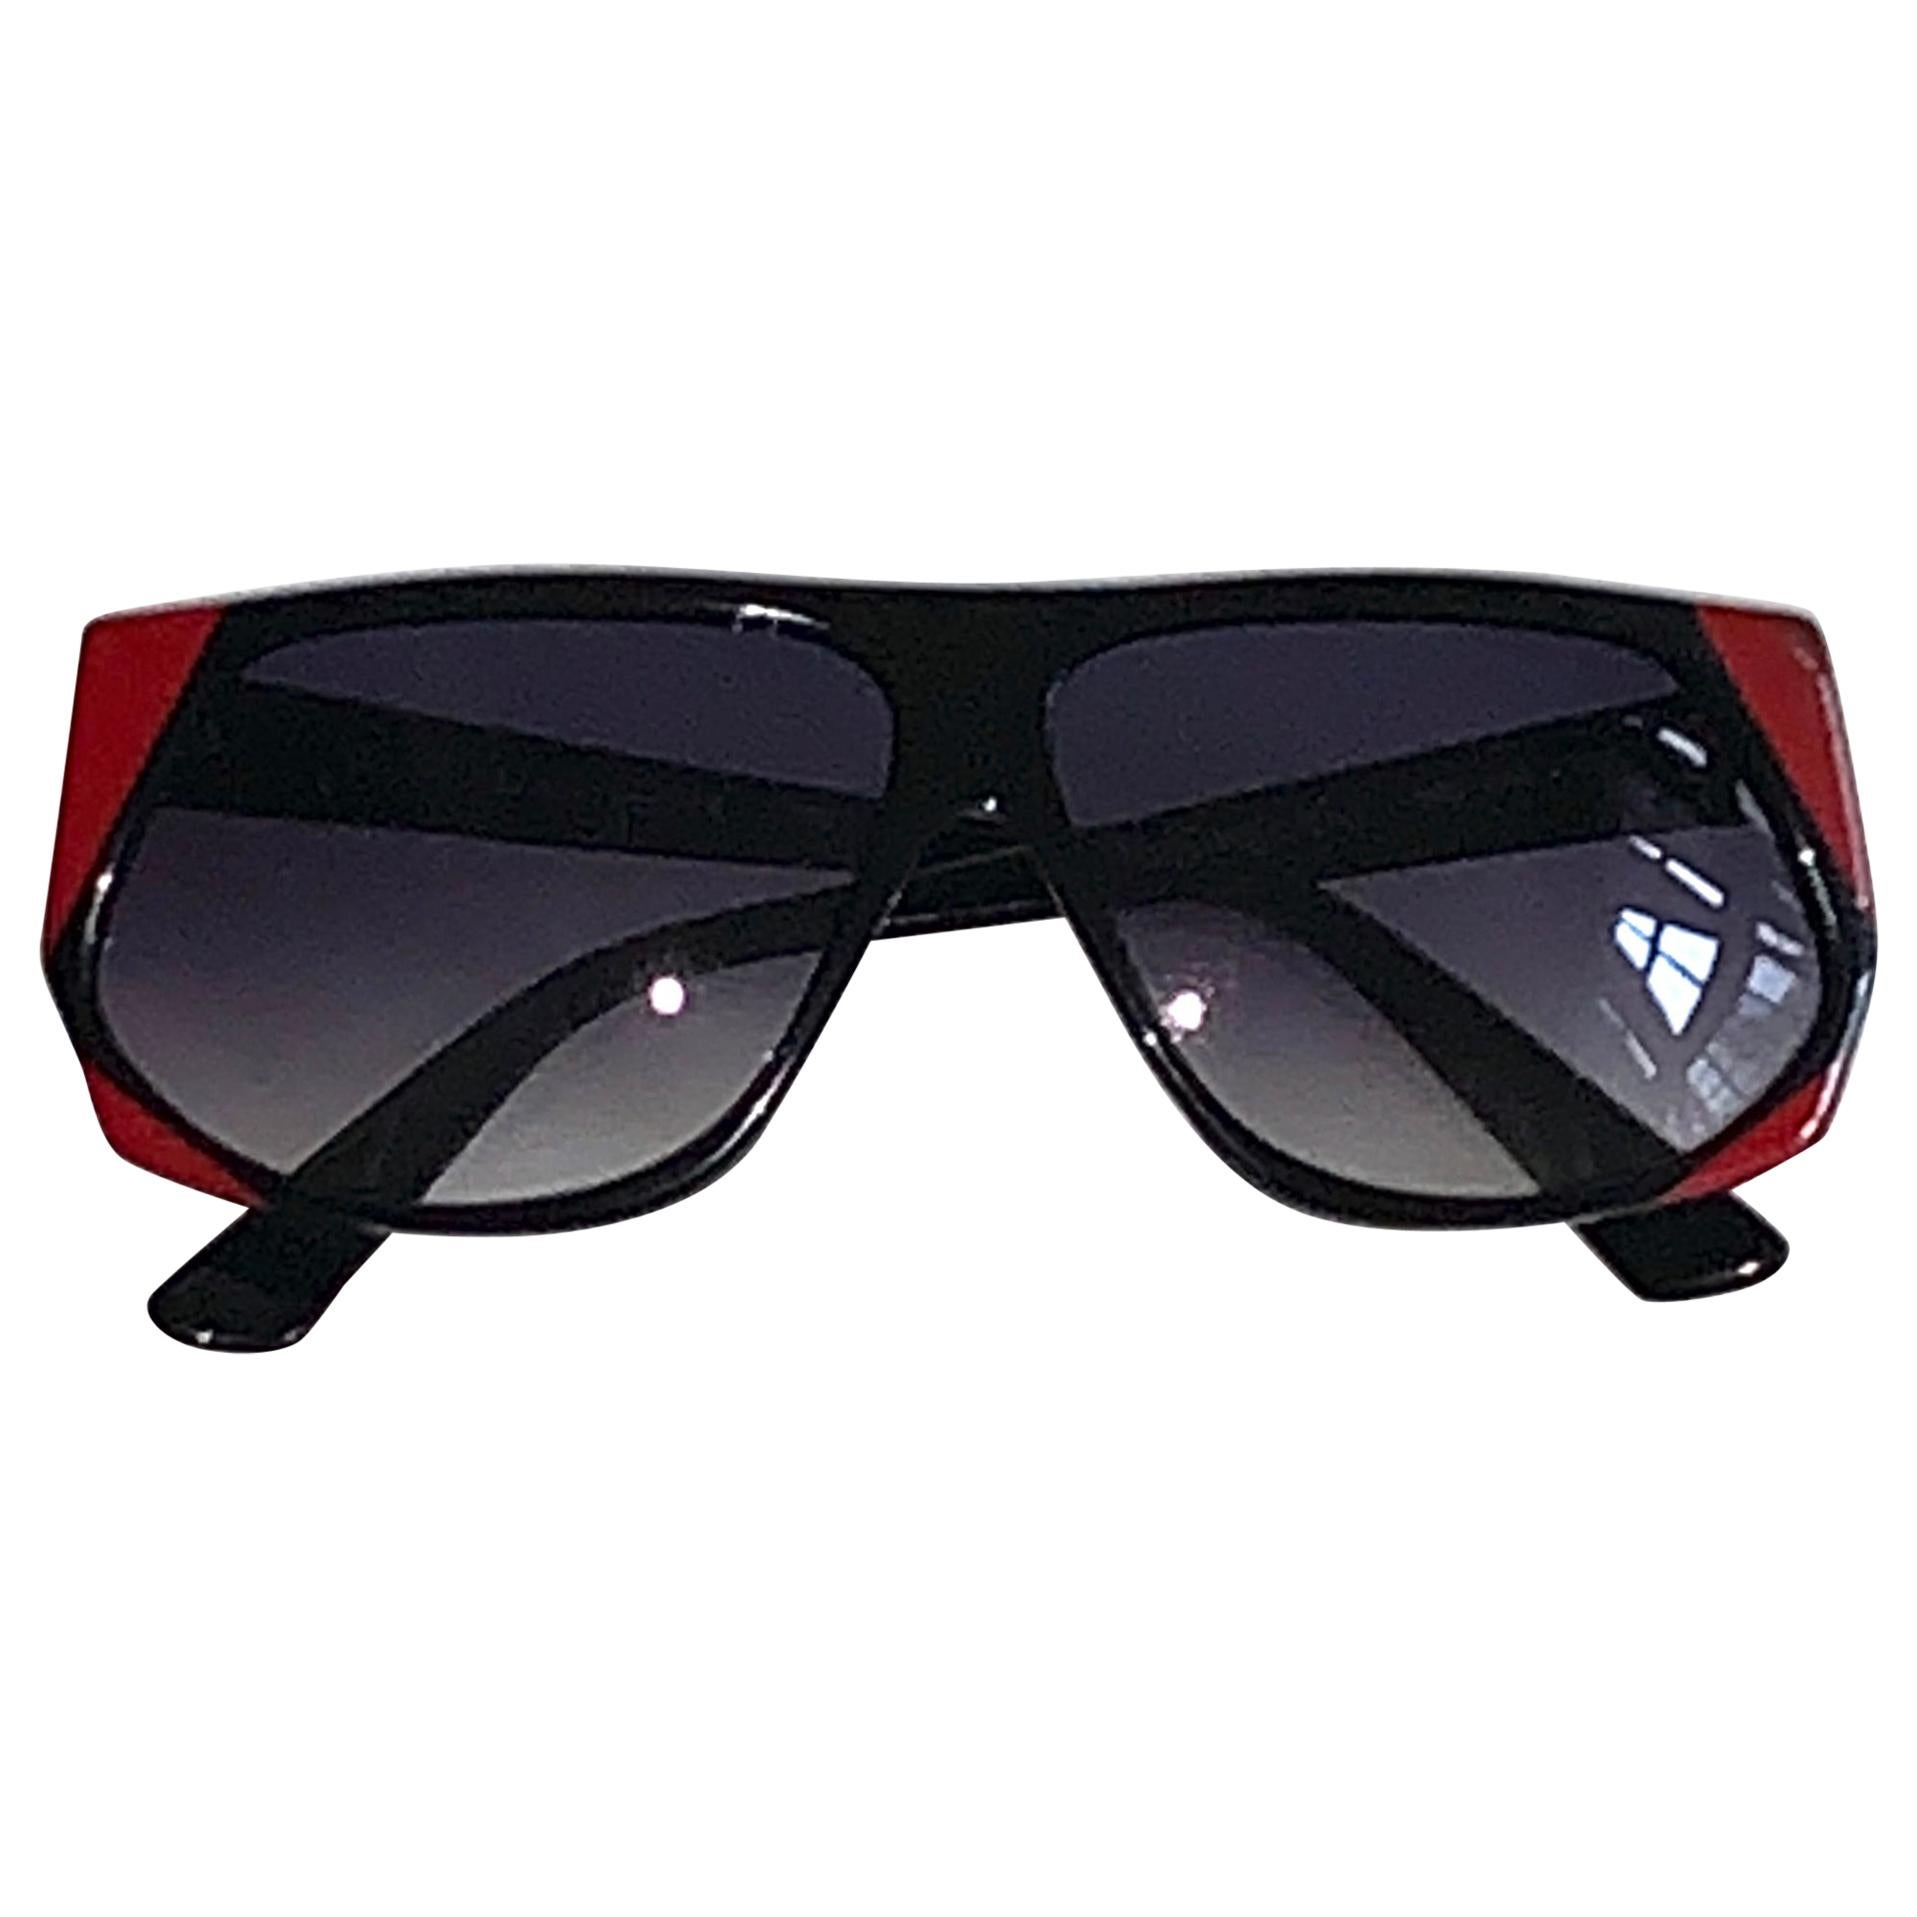 Yves Saint Laurent 1980s Black and Red Vintage Sunglasses YSL Logo Museum Piece